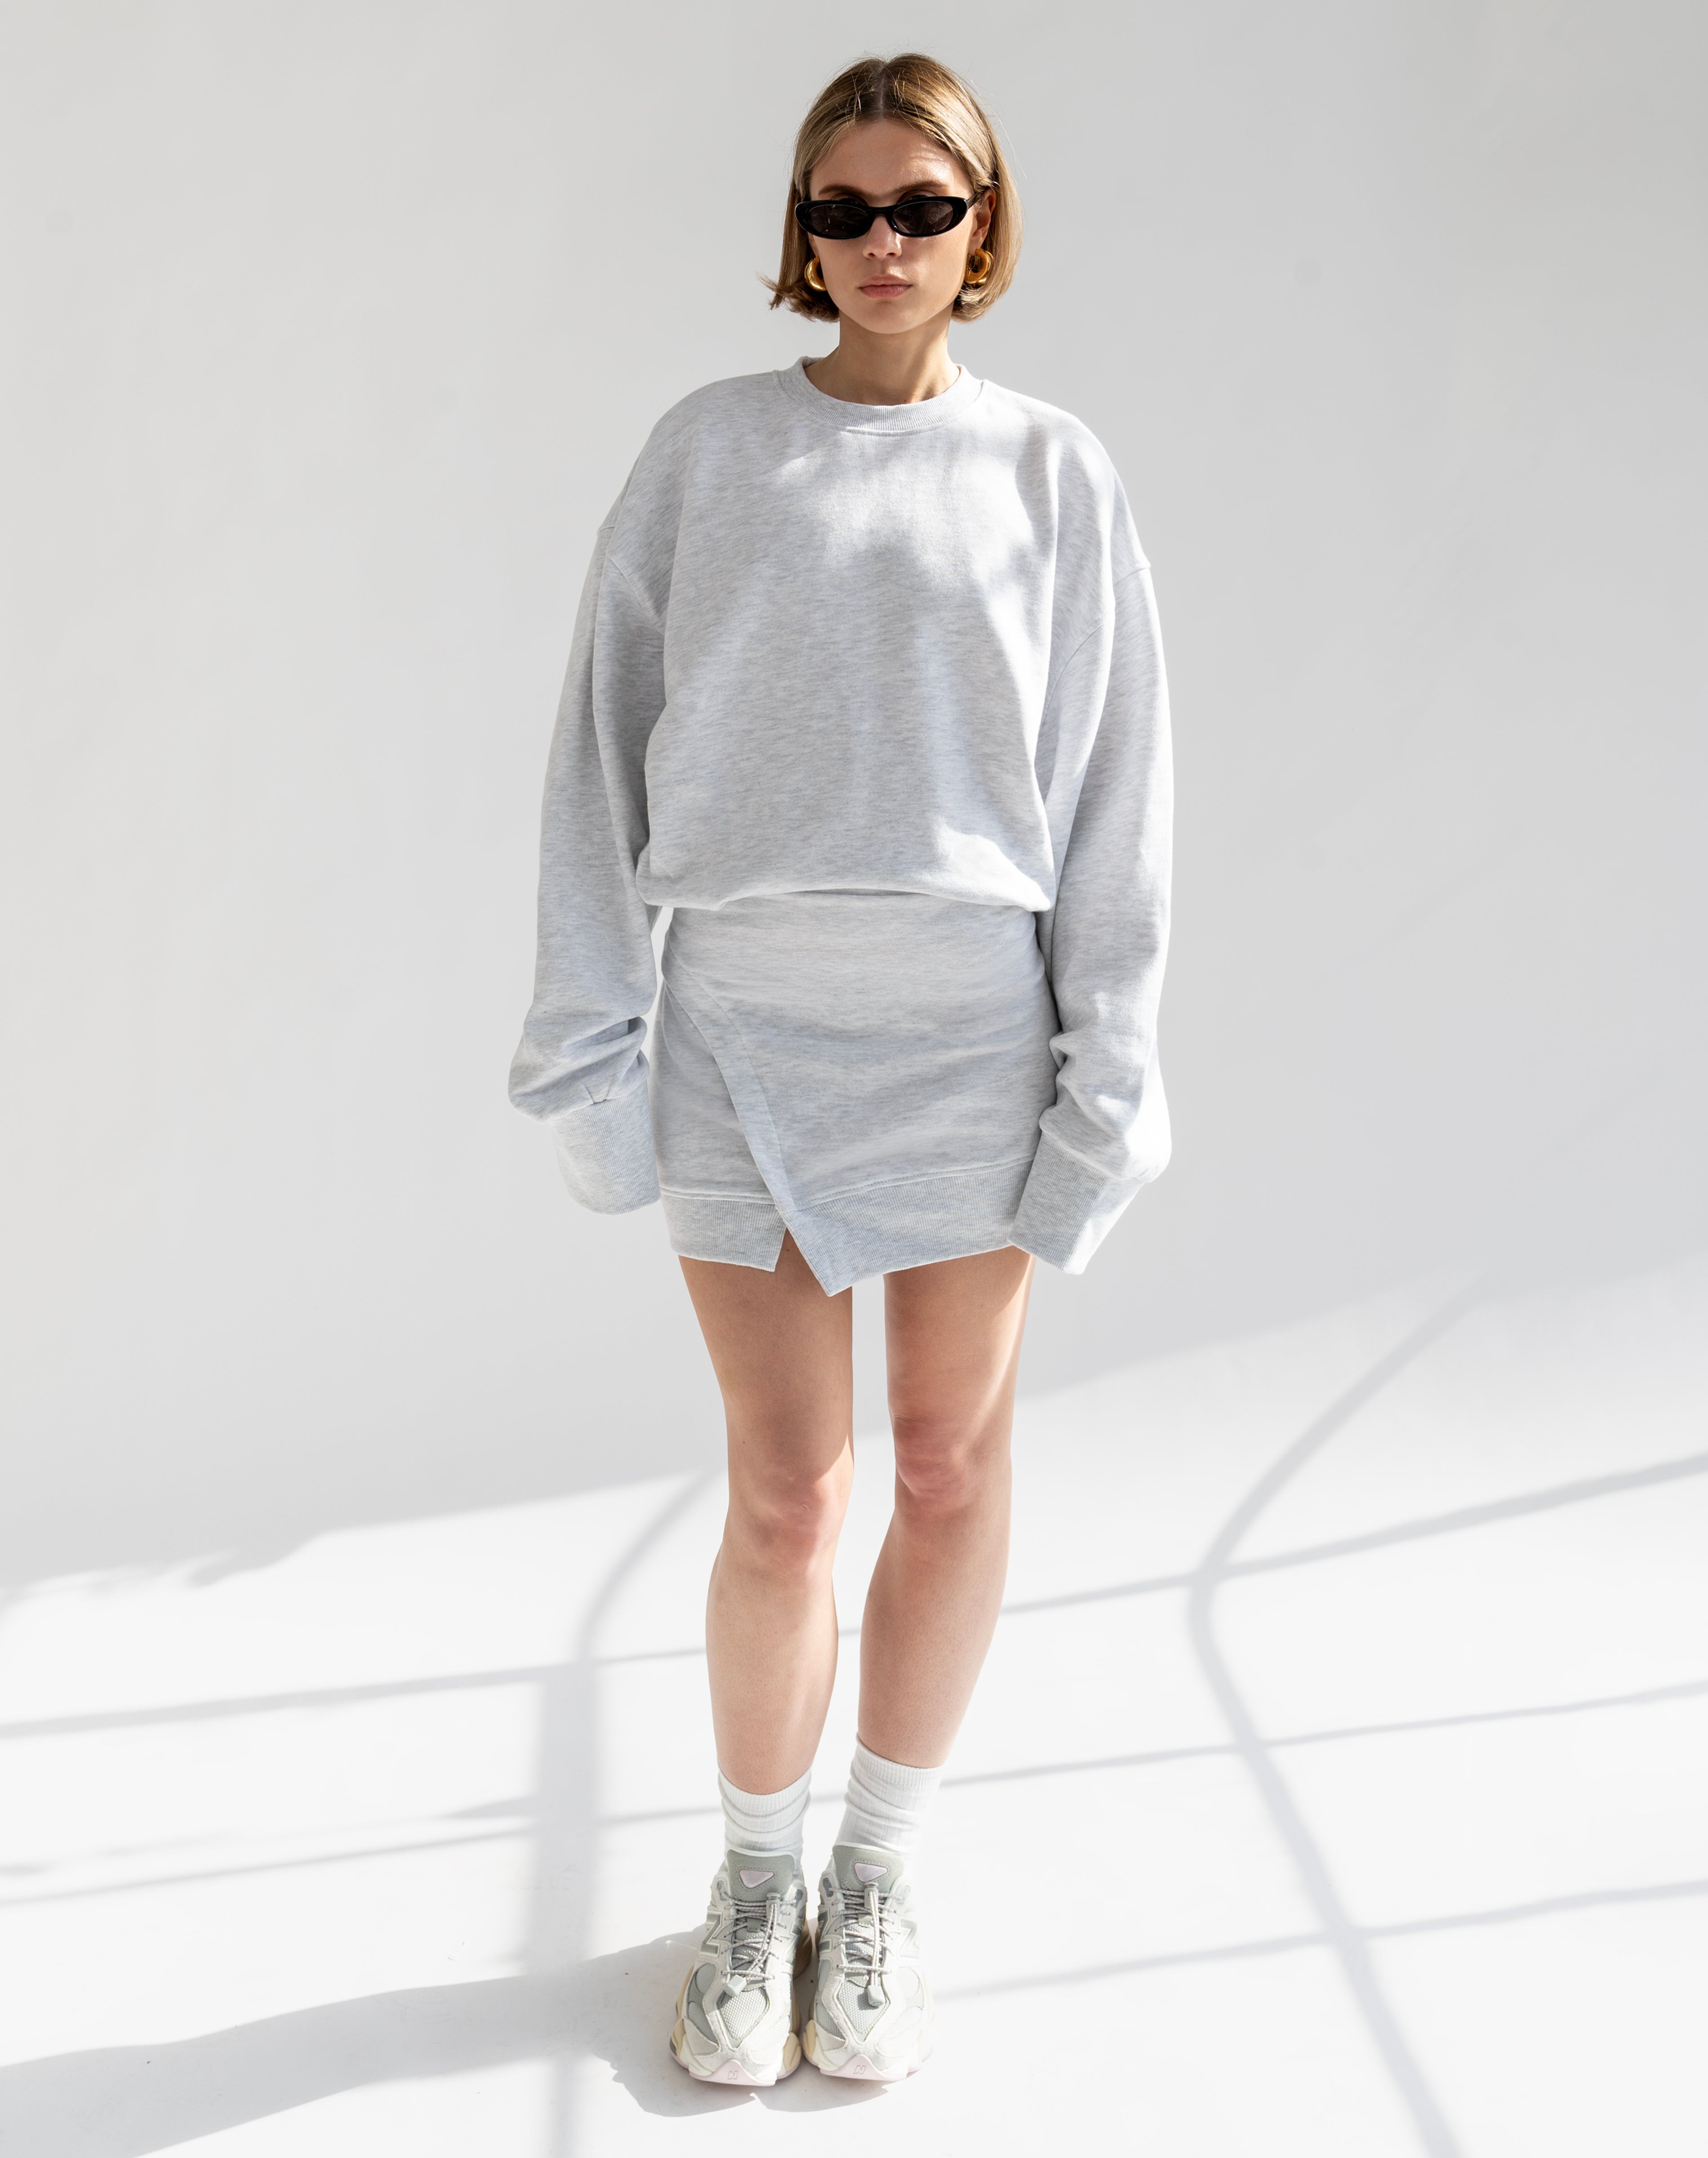 August Sweatshirt Mini Dress, Grey - Pre Order